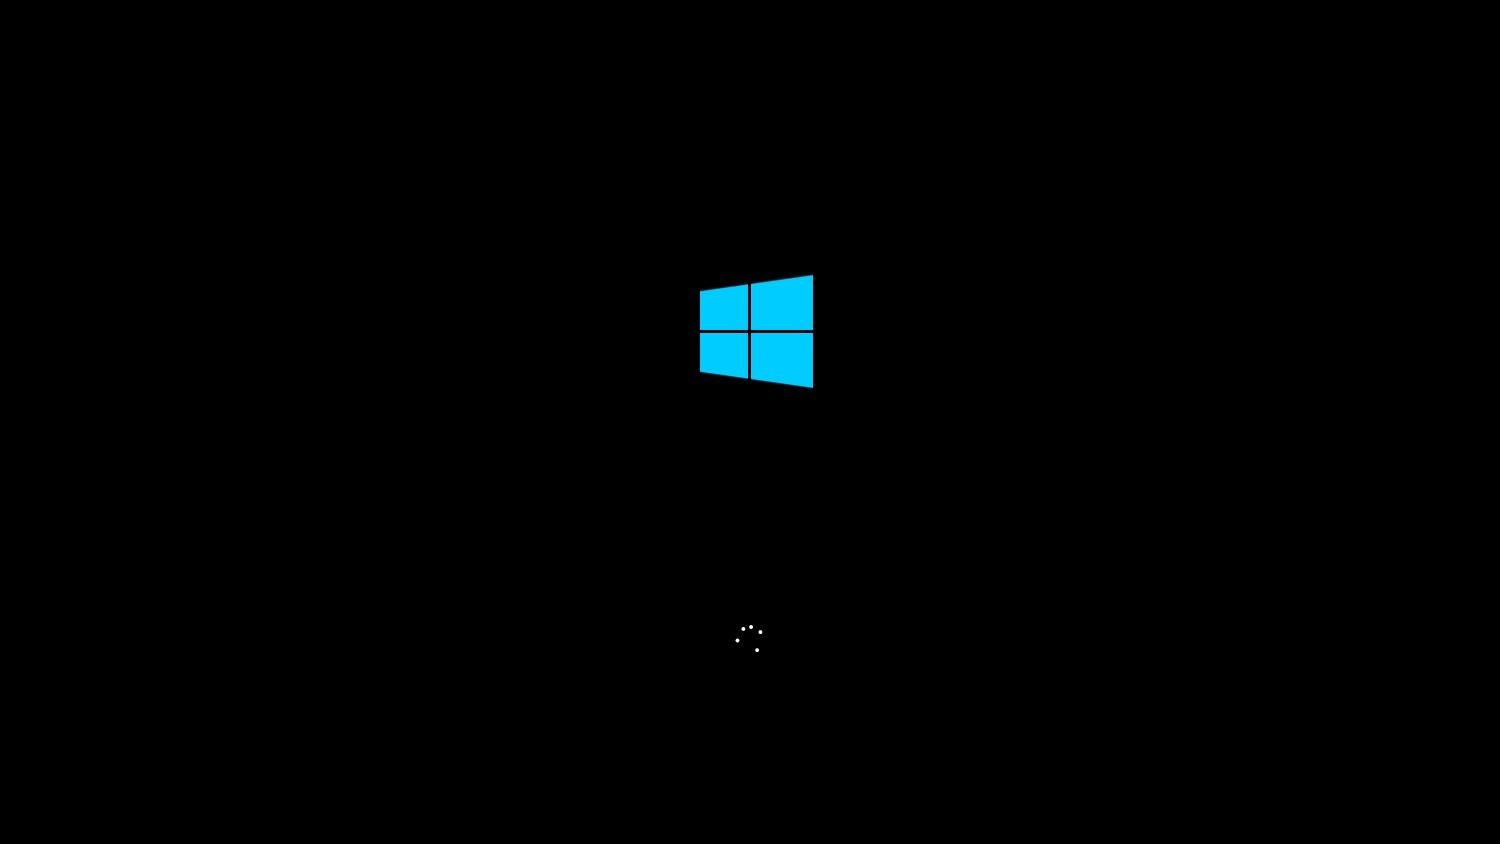 Windows 81 Boot Screen